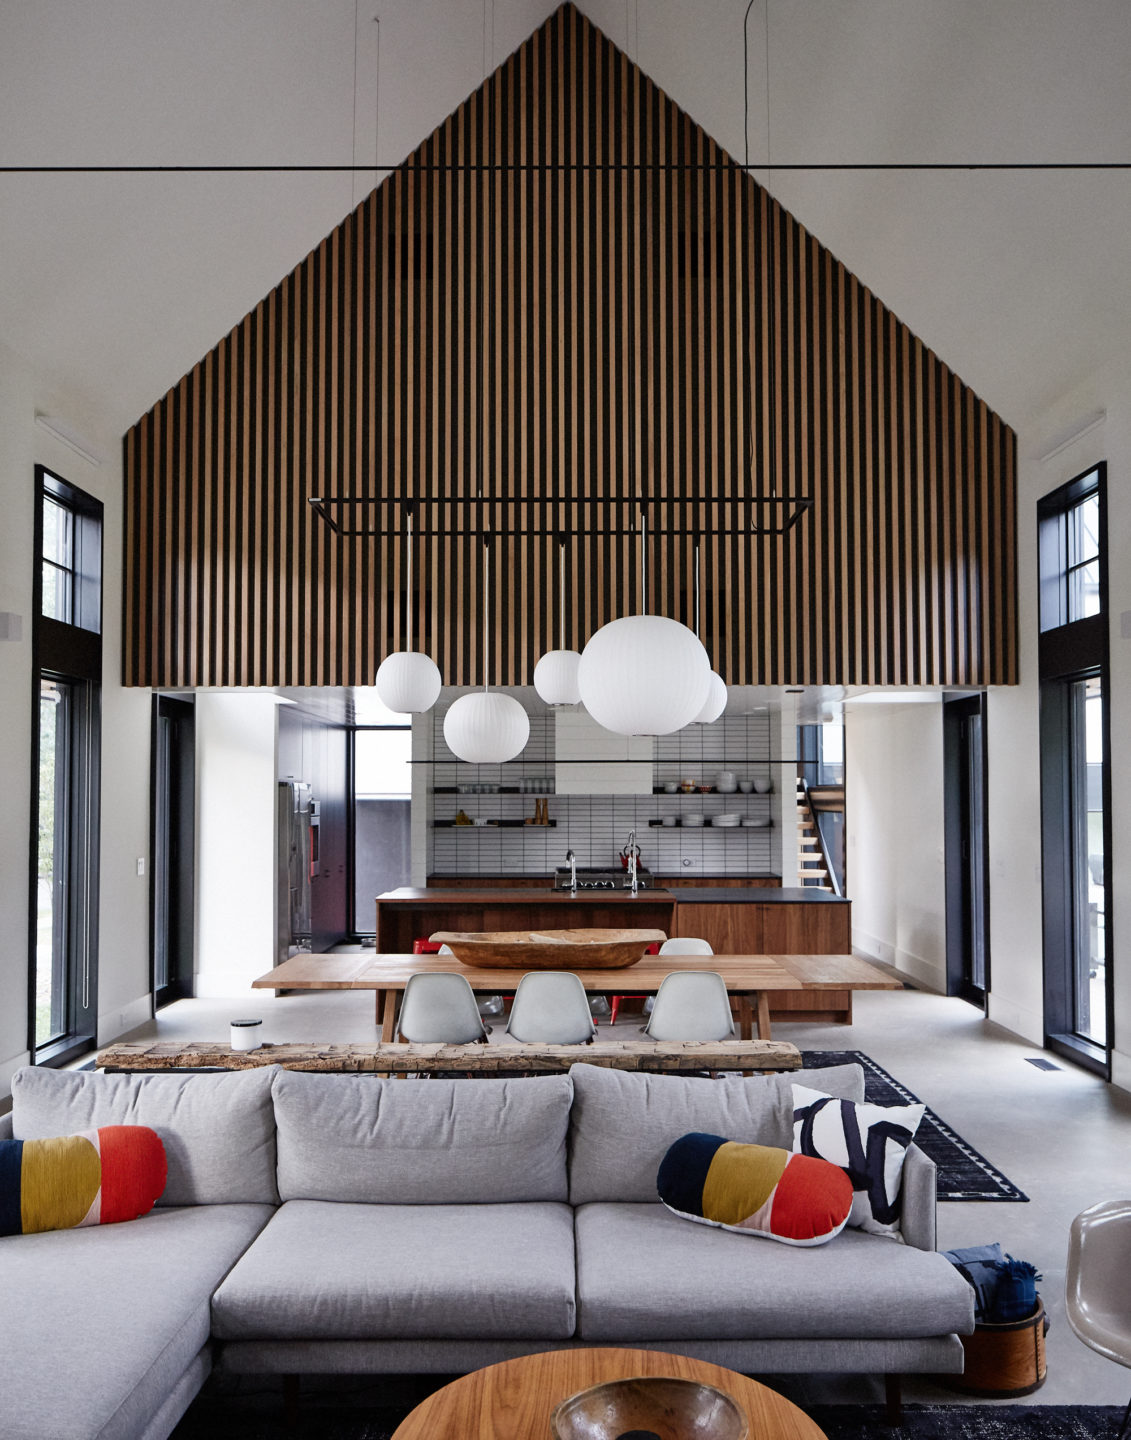 evergreen-portfolio-danish-modern-shingle-home-interior-DR-dining-room-kitchen-LR-living-room-paneling_FEATURED